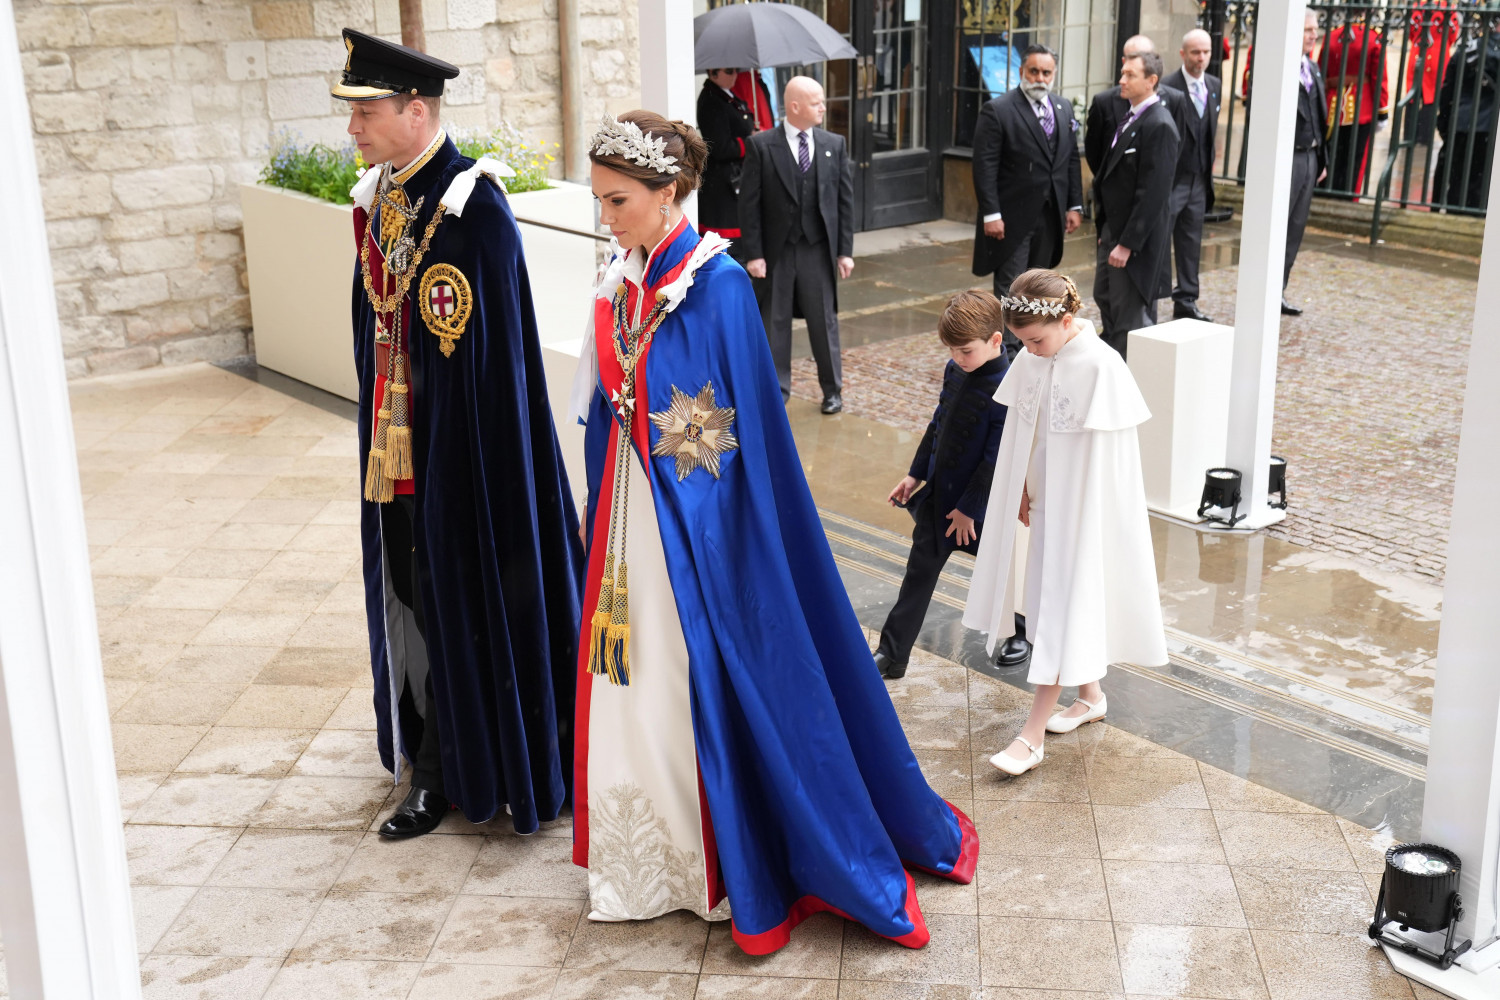 Kral Charles Kate Middleton’a yeni ünvan verdi